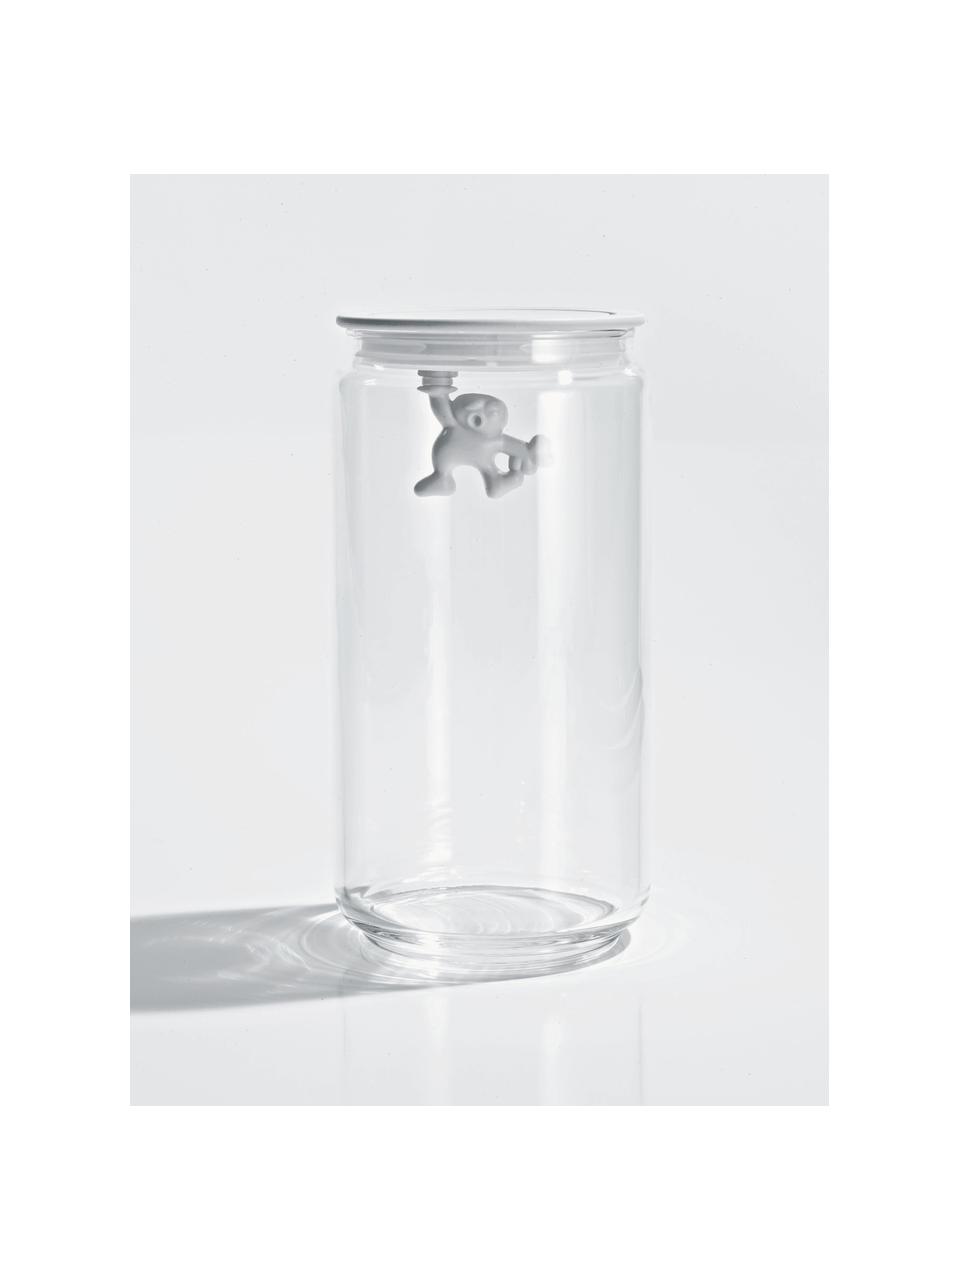 Dóza Gianni, V 21 cm, Sklo, termoplastická pryskyřice, Bílá, transparentní, Ø 11 cm, V 21 cm